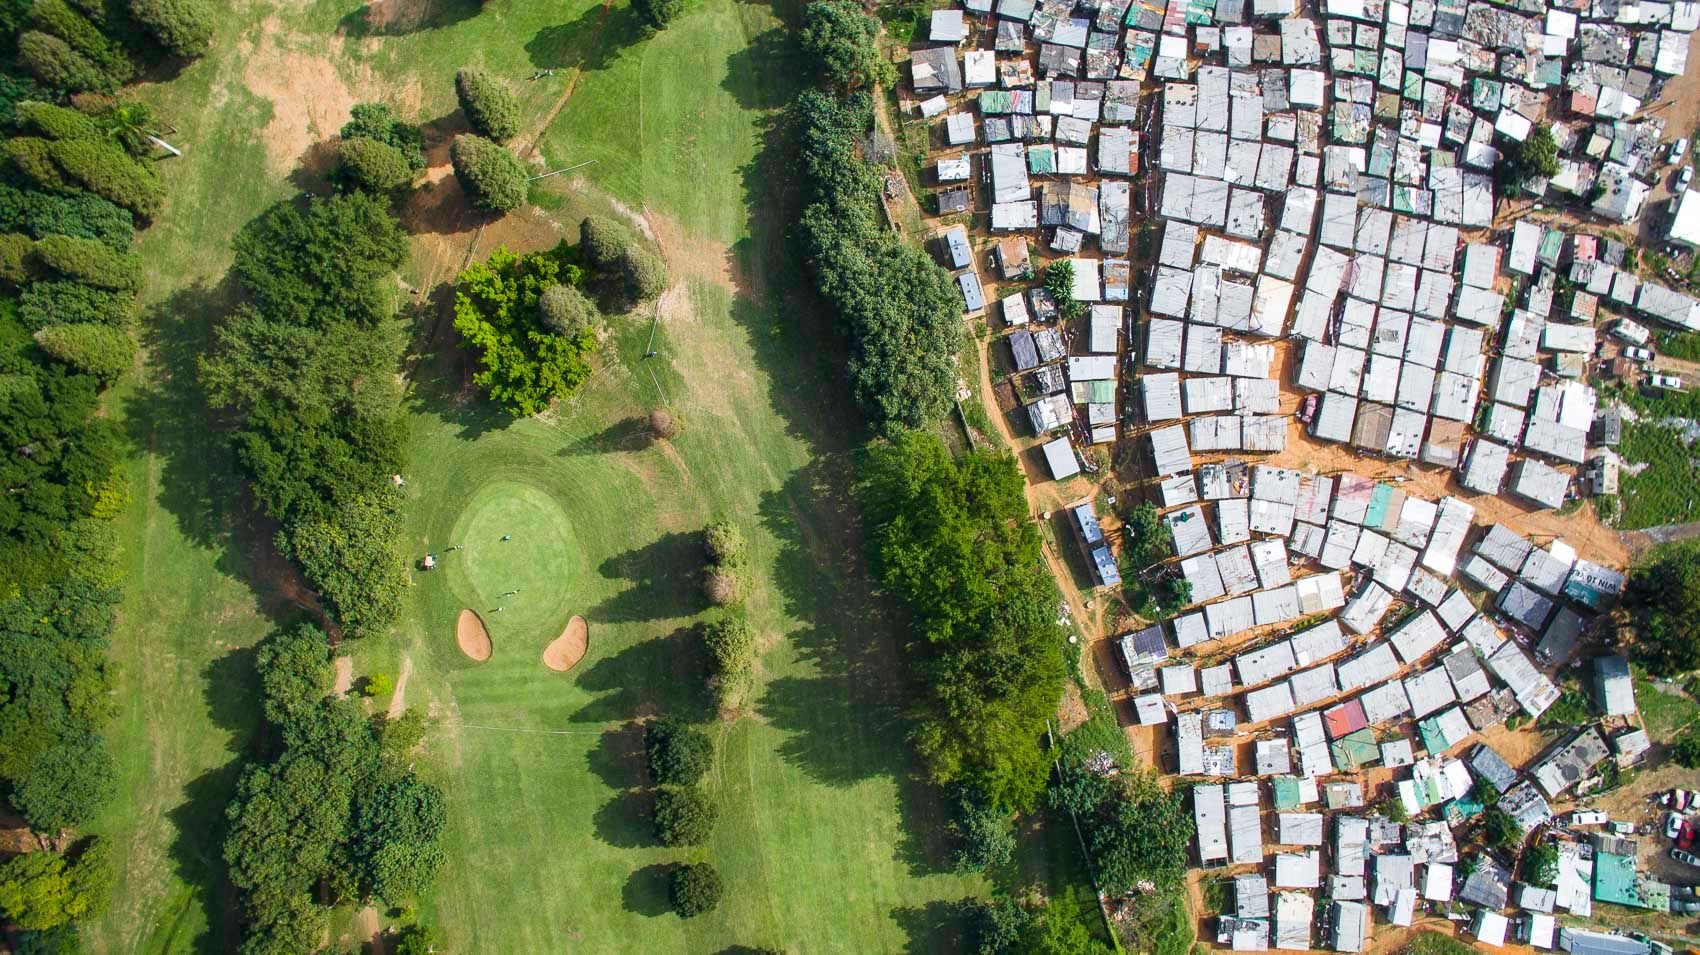 Campo de golf de Papwa Sewgolum (Durban, Sudáfrica).